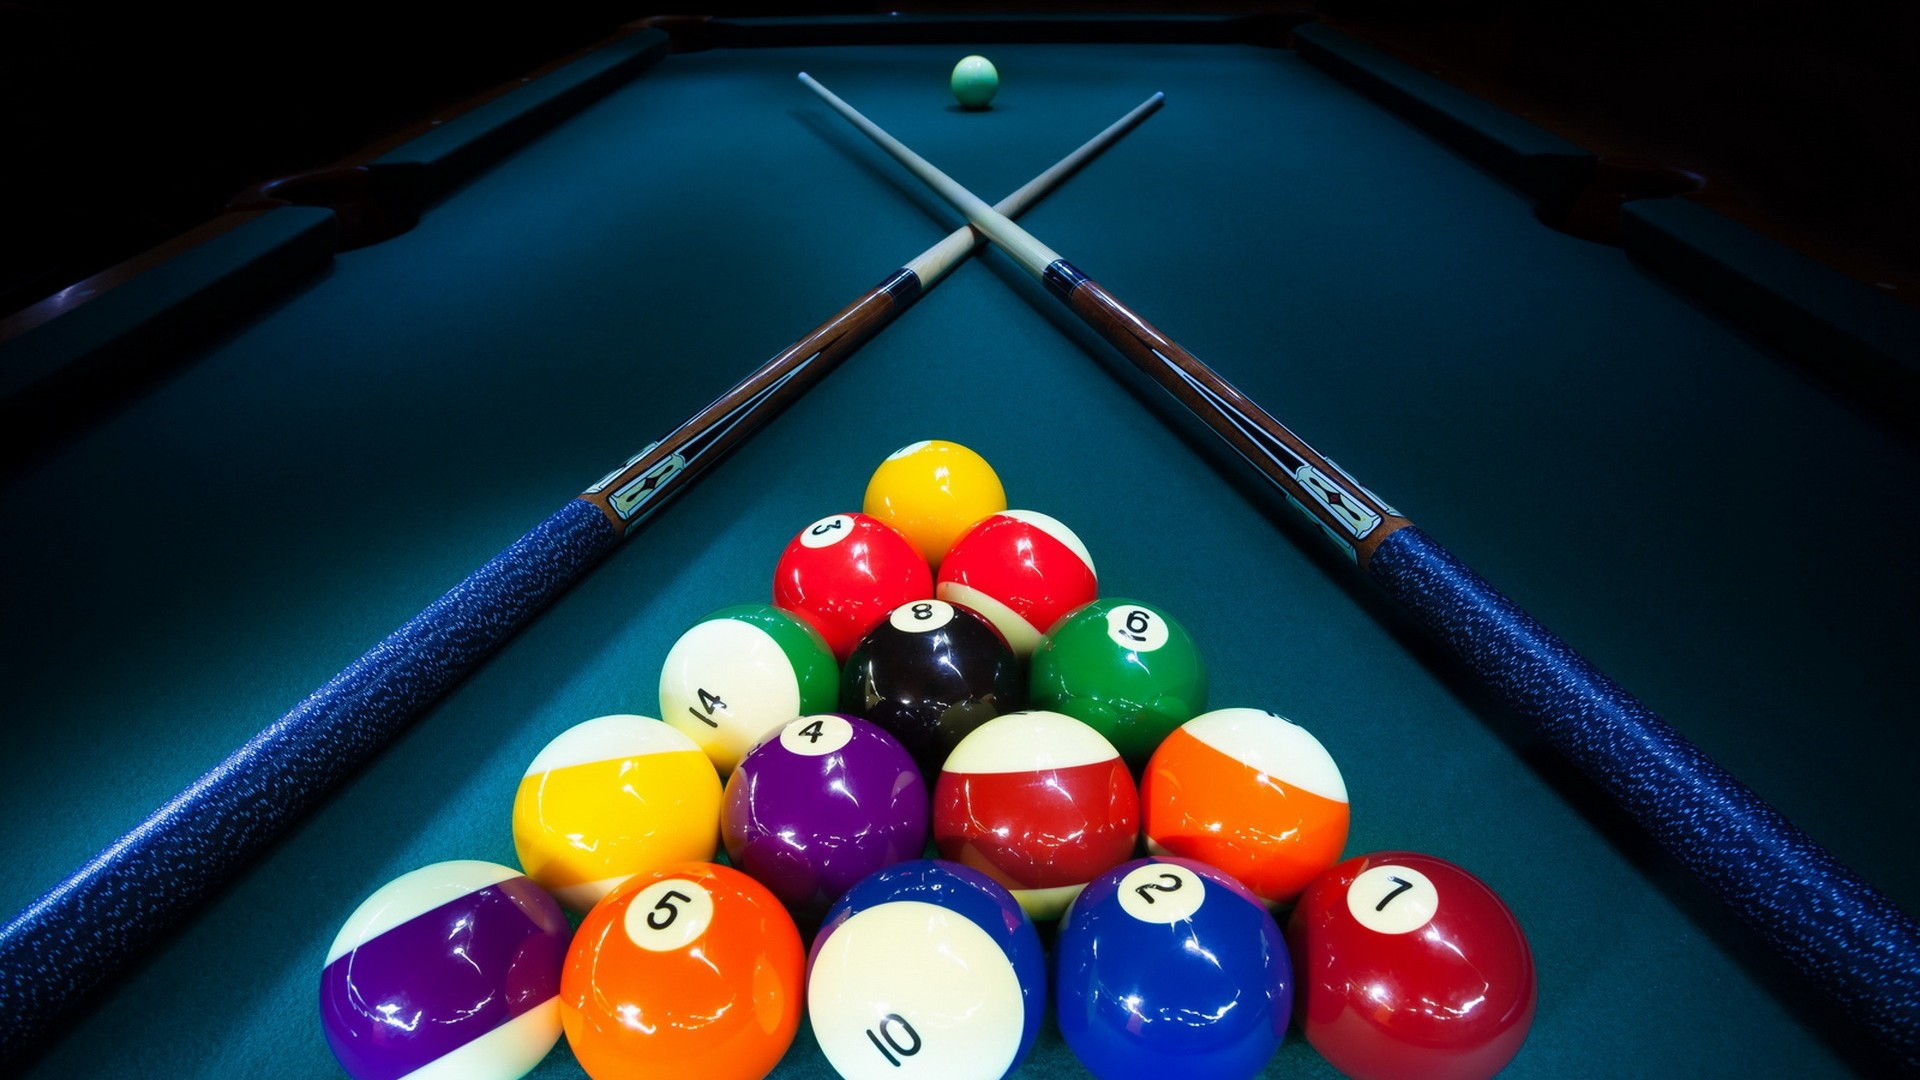 1920x1080 Pool table, cues, billiard balls: